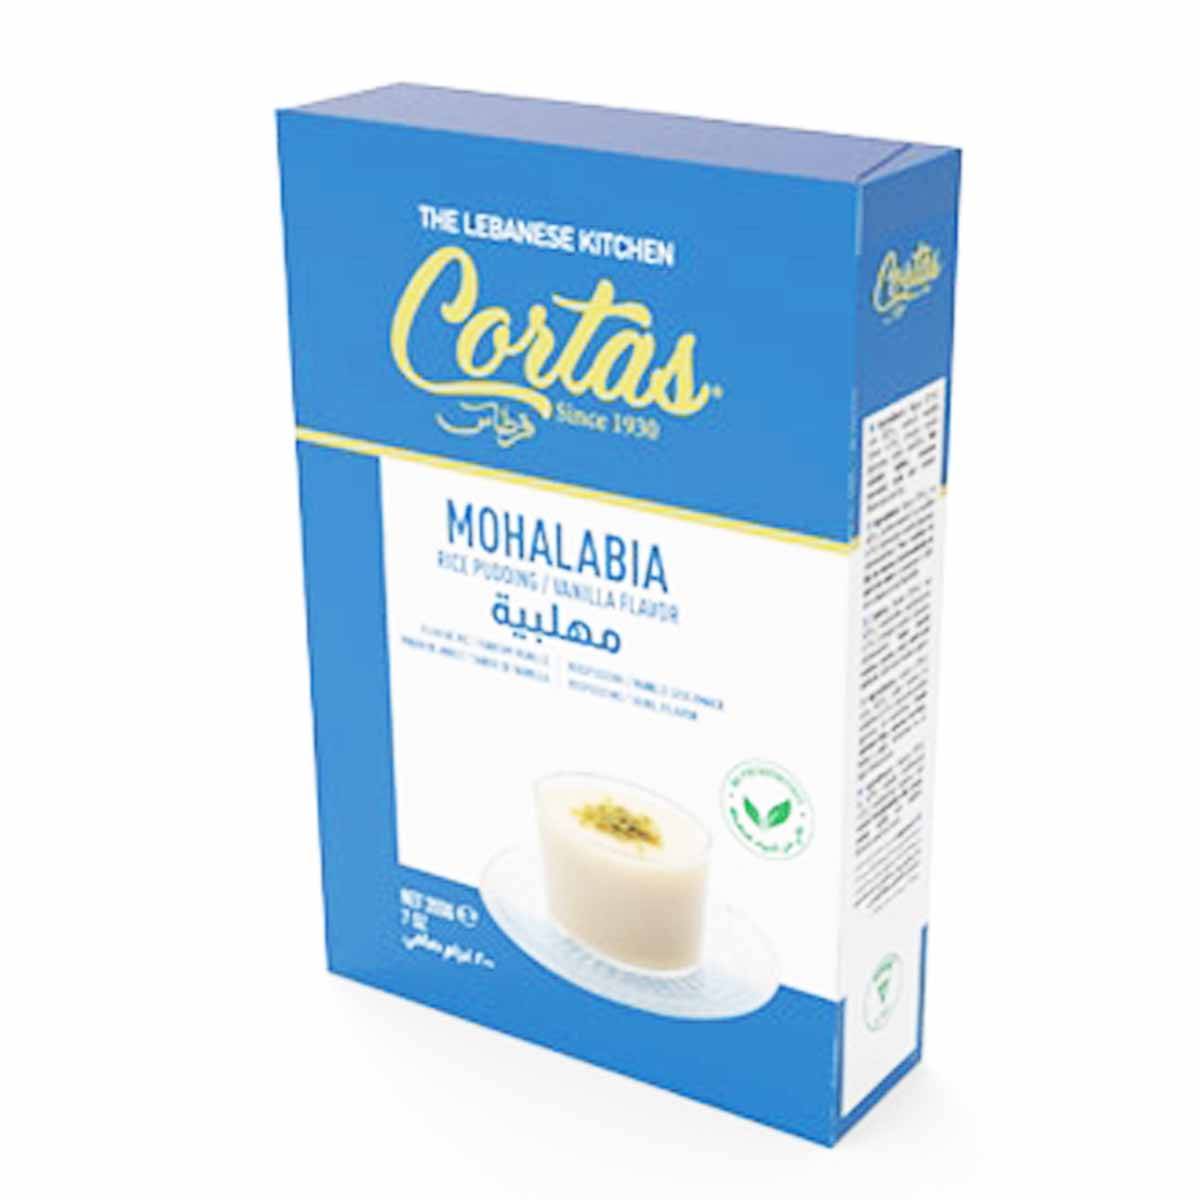 CORTAS Mohalabia - Rice Pudding / Vanilla Flavor, 7 oz. 